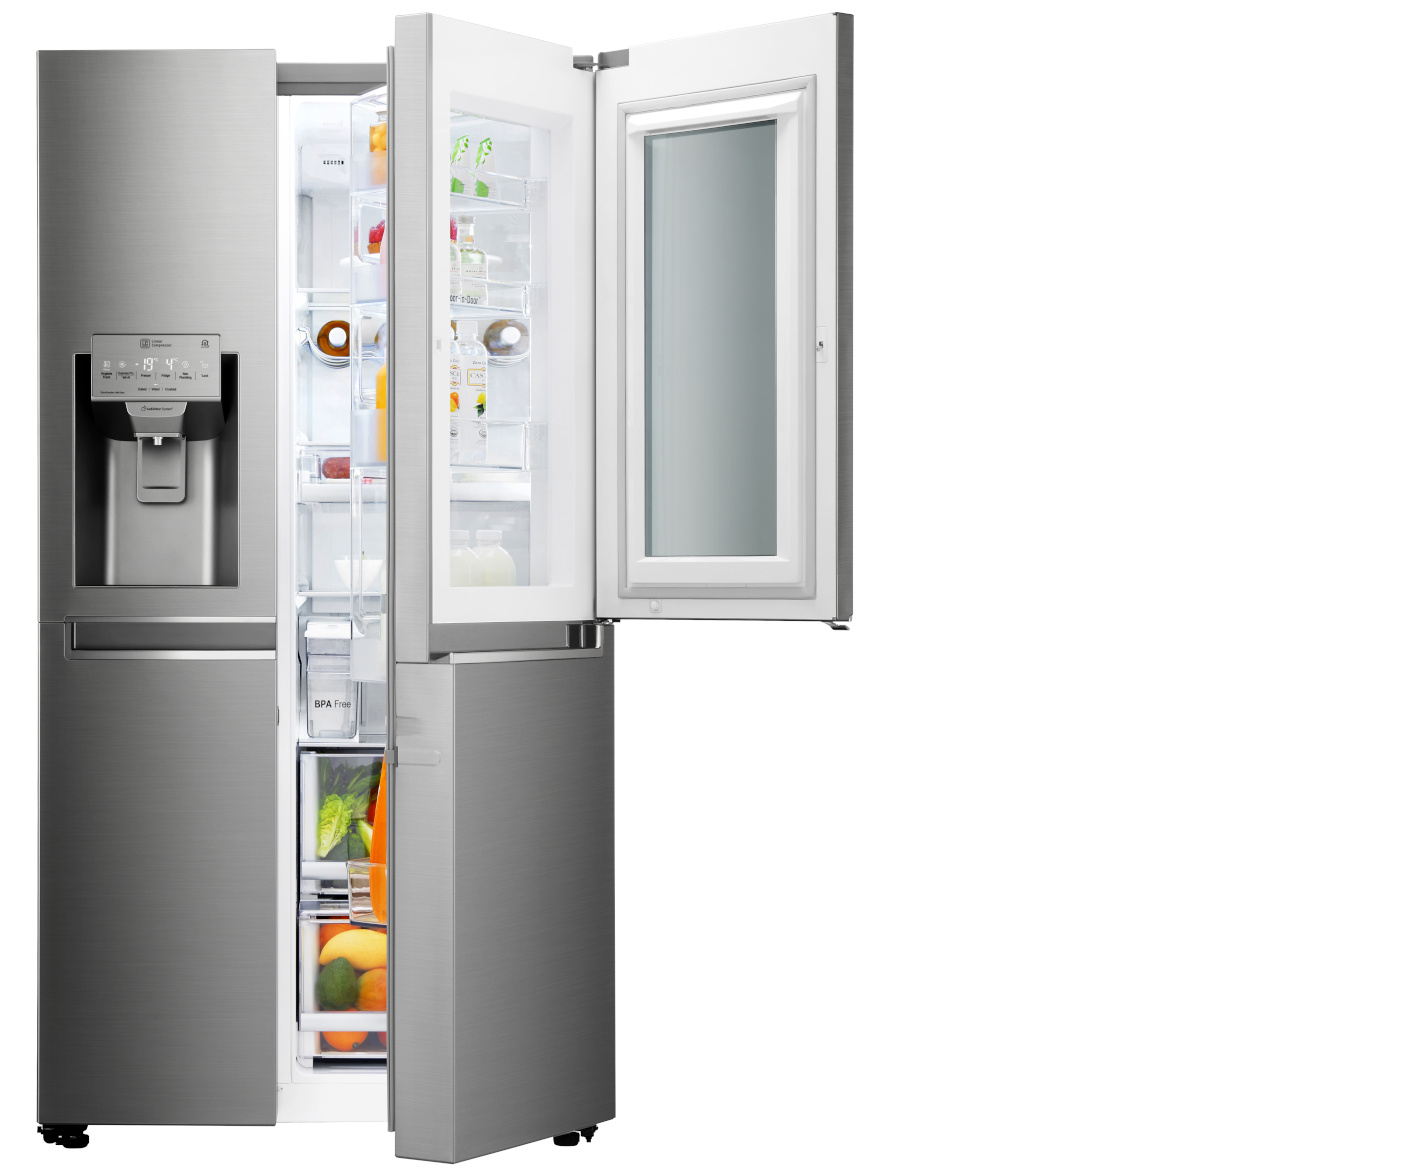 Squarerooms_LG refrigerator